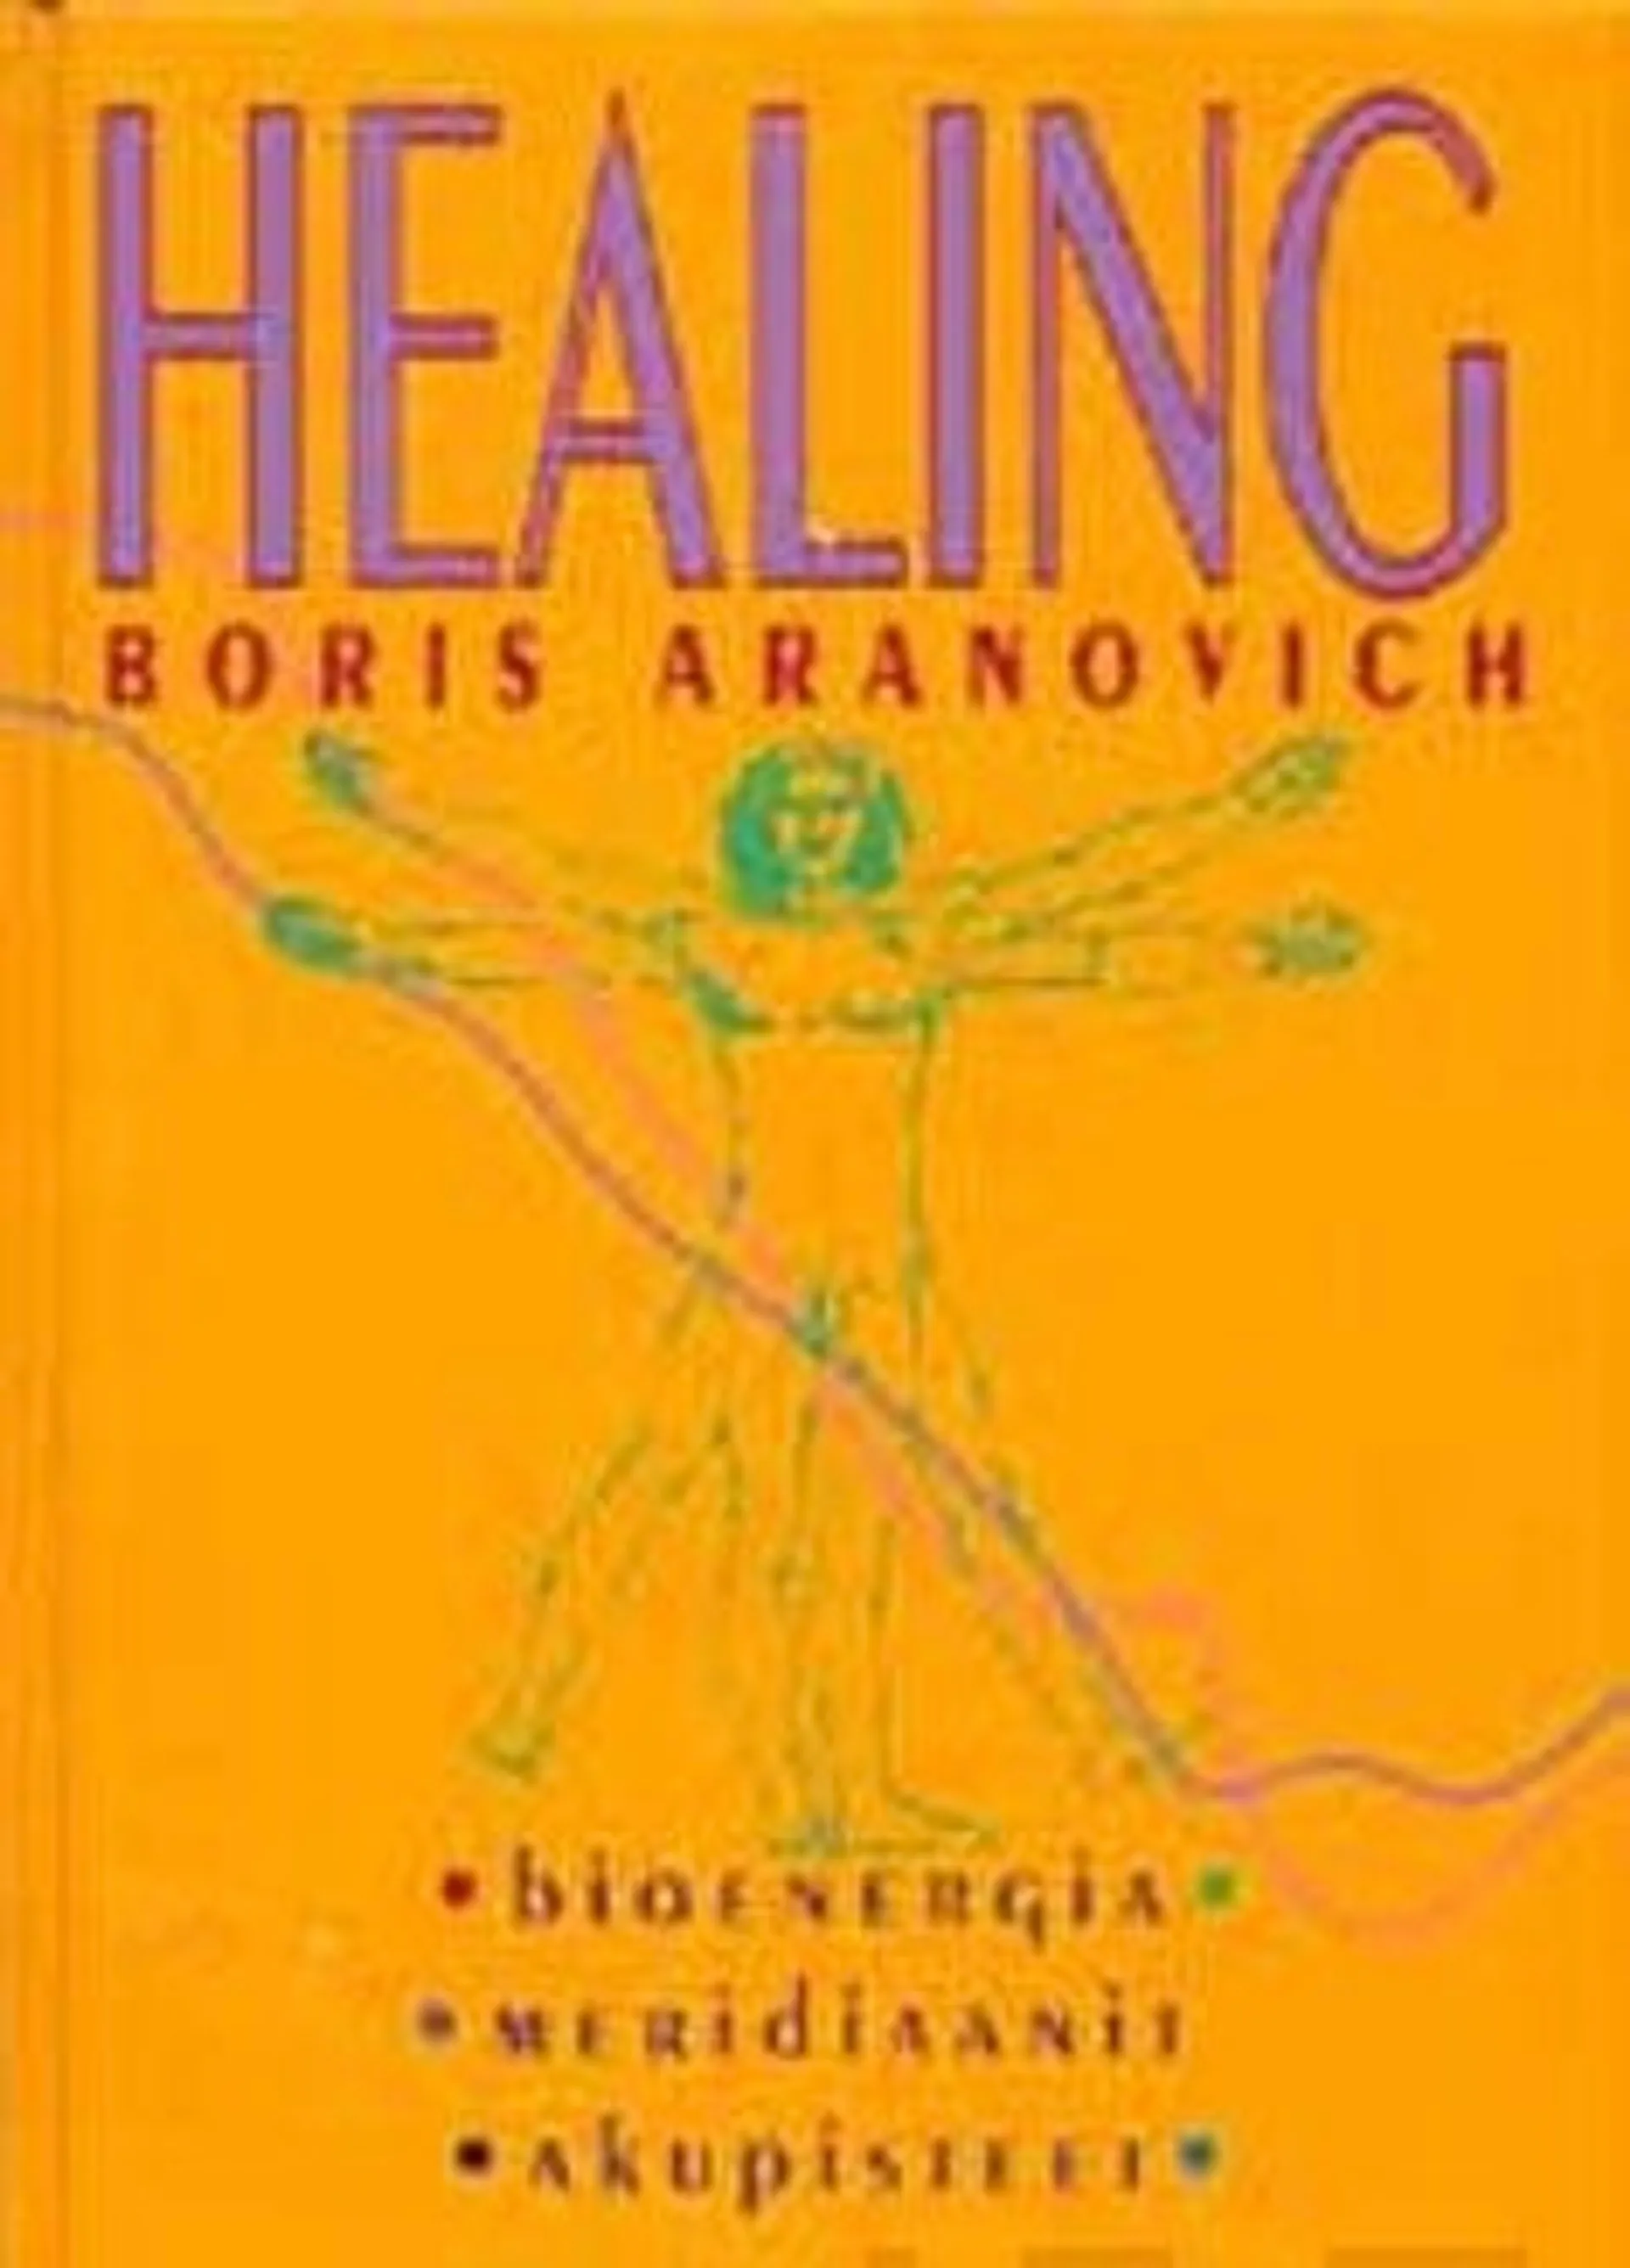 Aranovich, Healing - bioenergia, meridiaanit, akupisteet